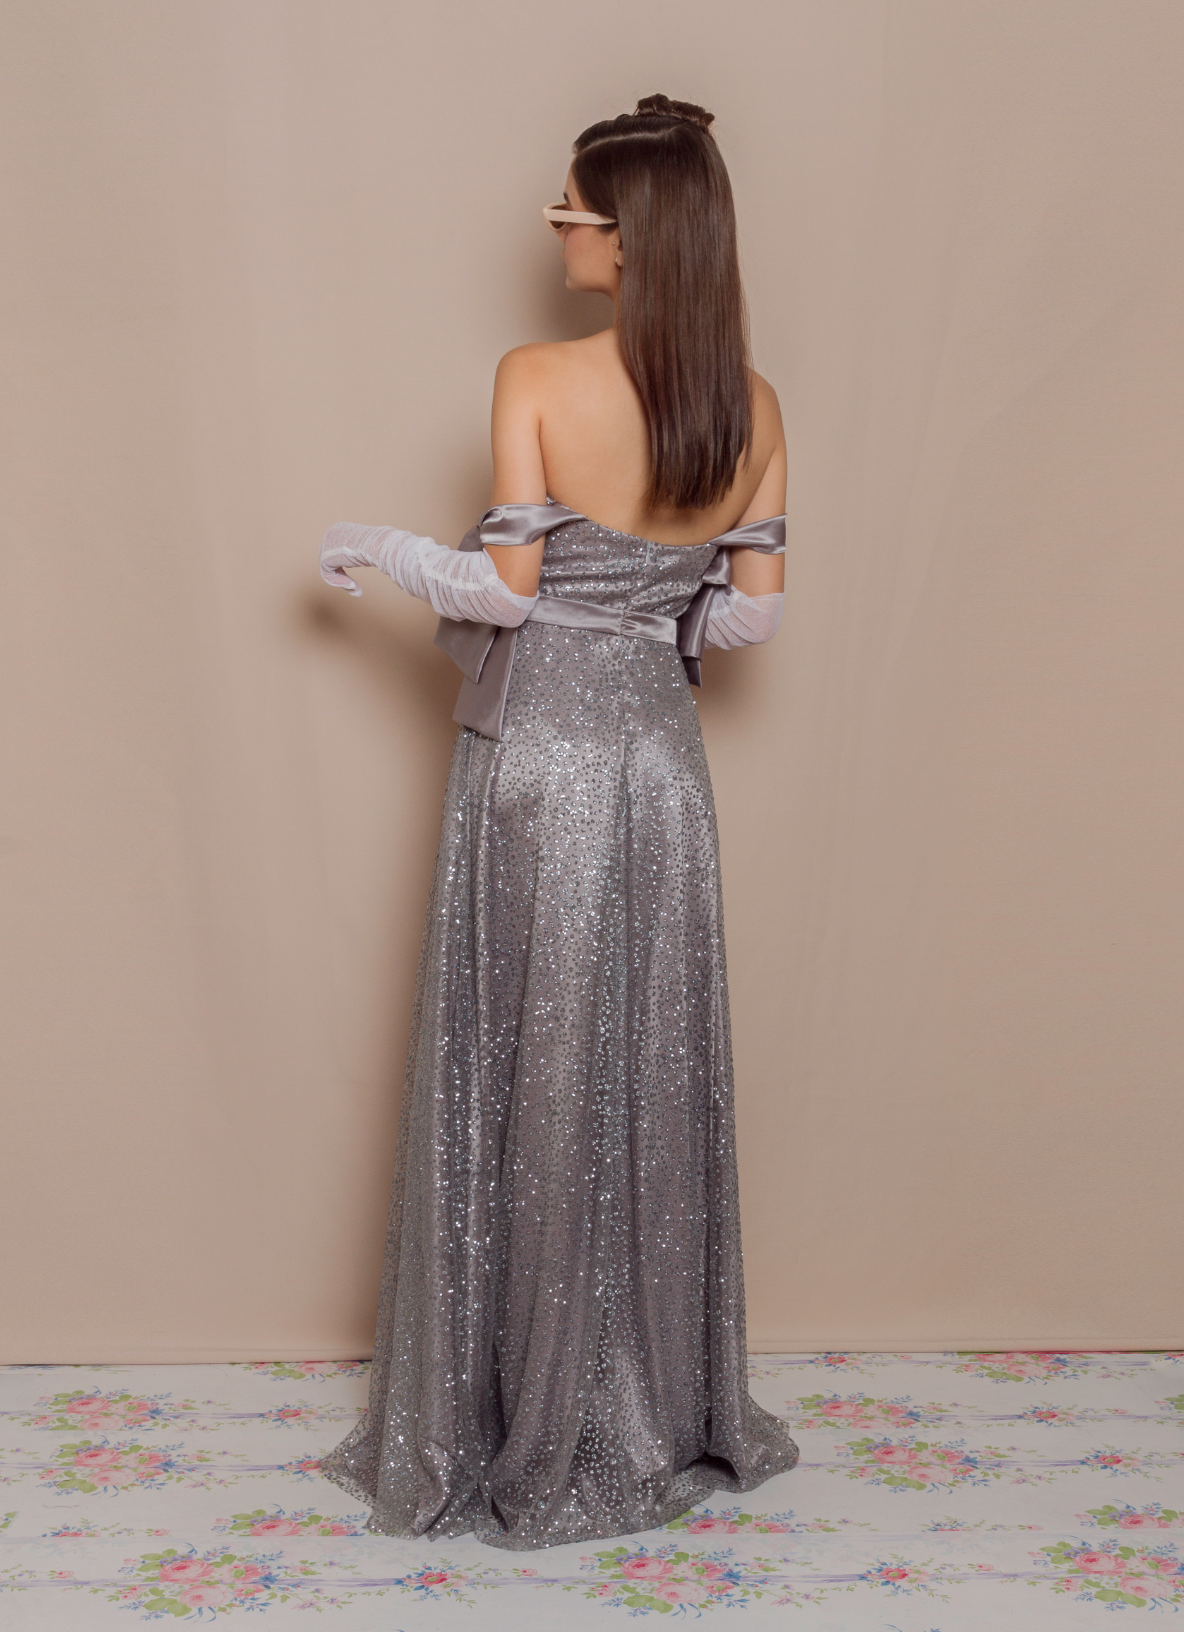 Dâ Silver Shiny Dress